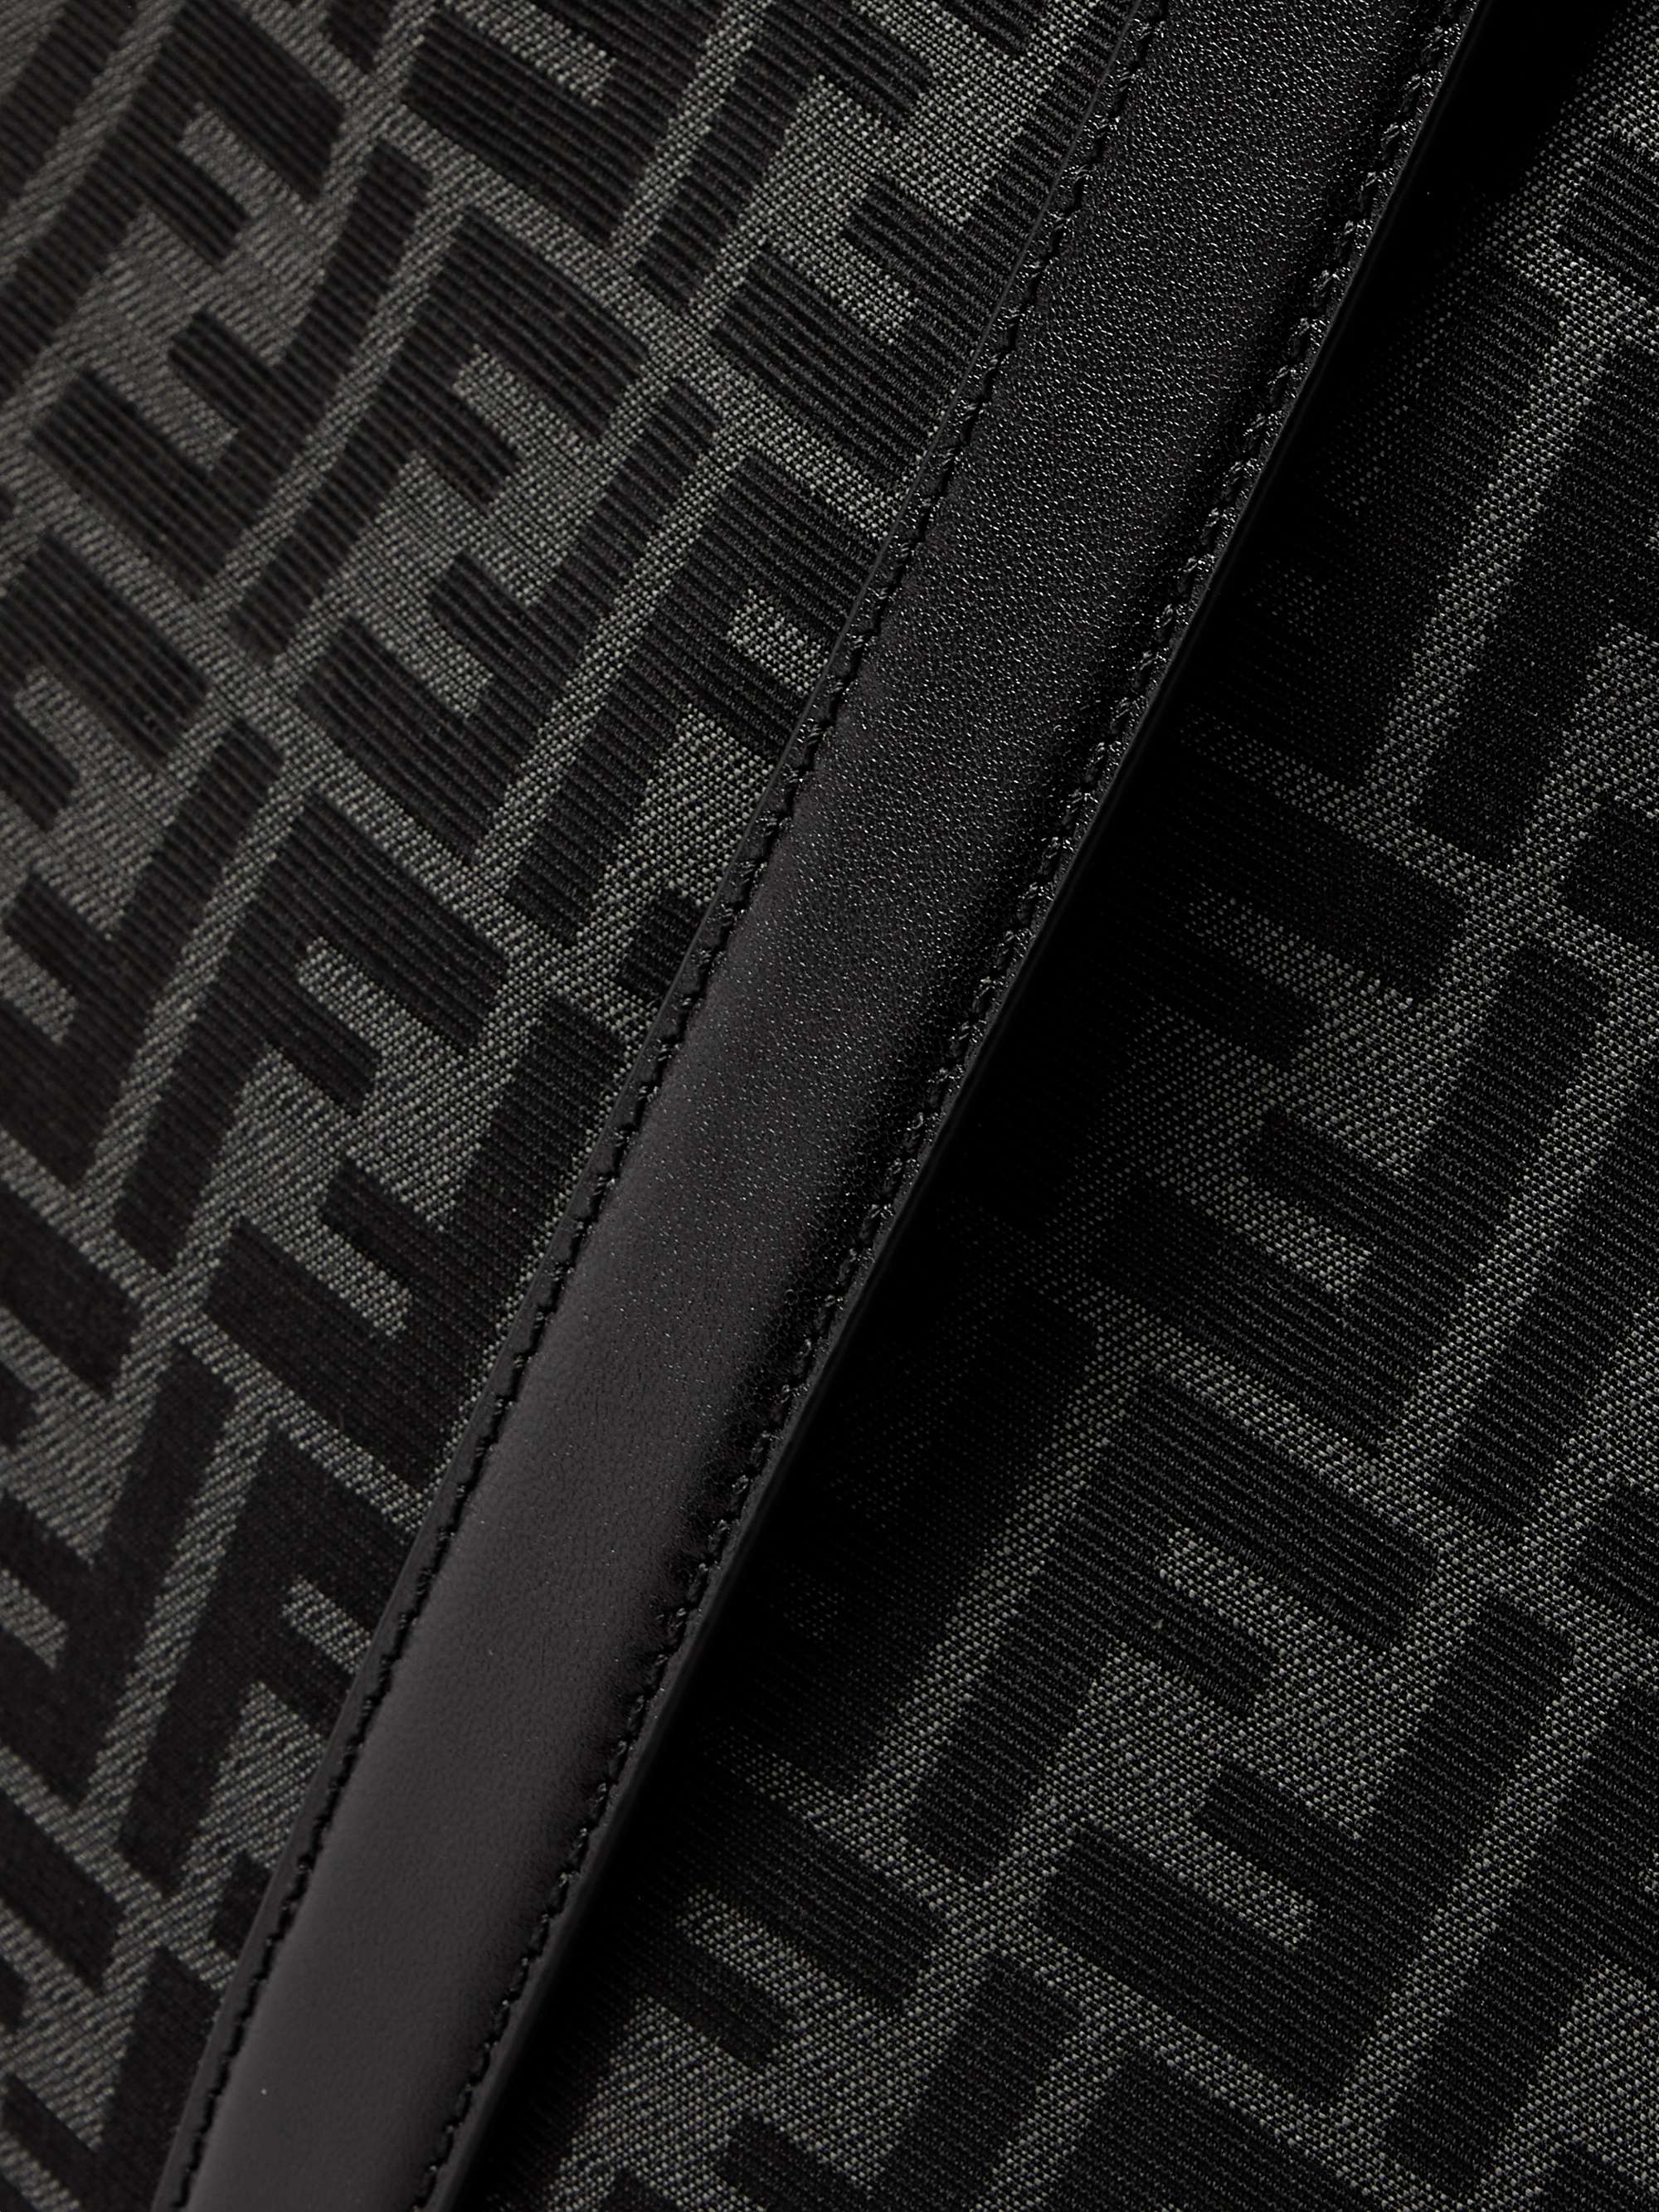 FENDI Leather-Trimmed Logo-Jacquard Canvas Tote Bag